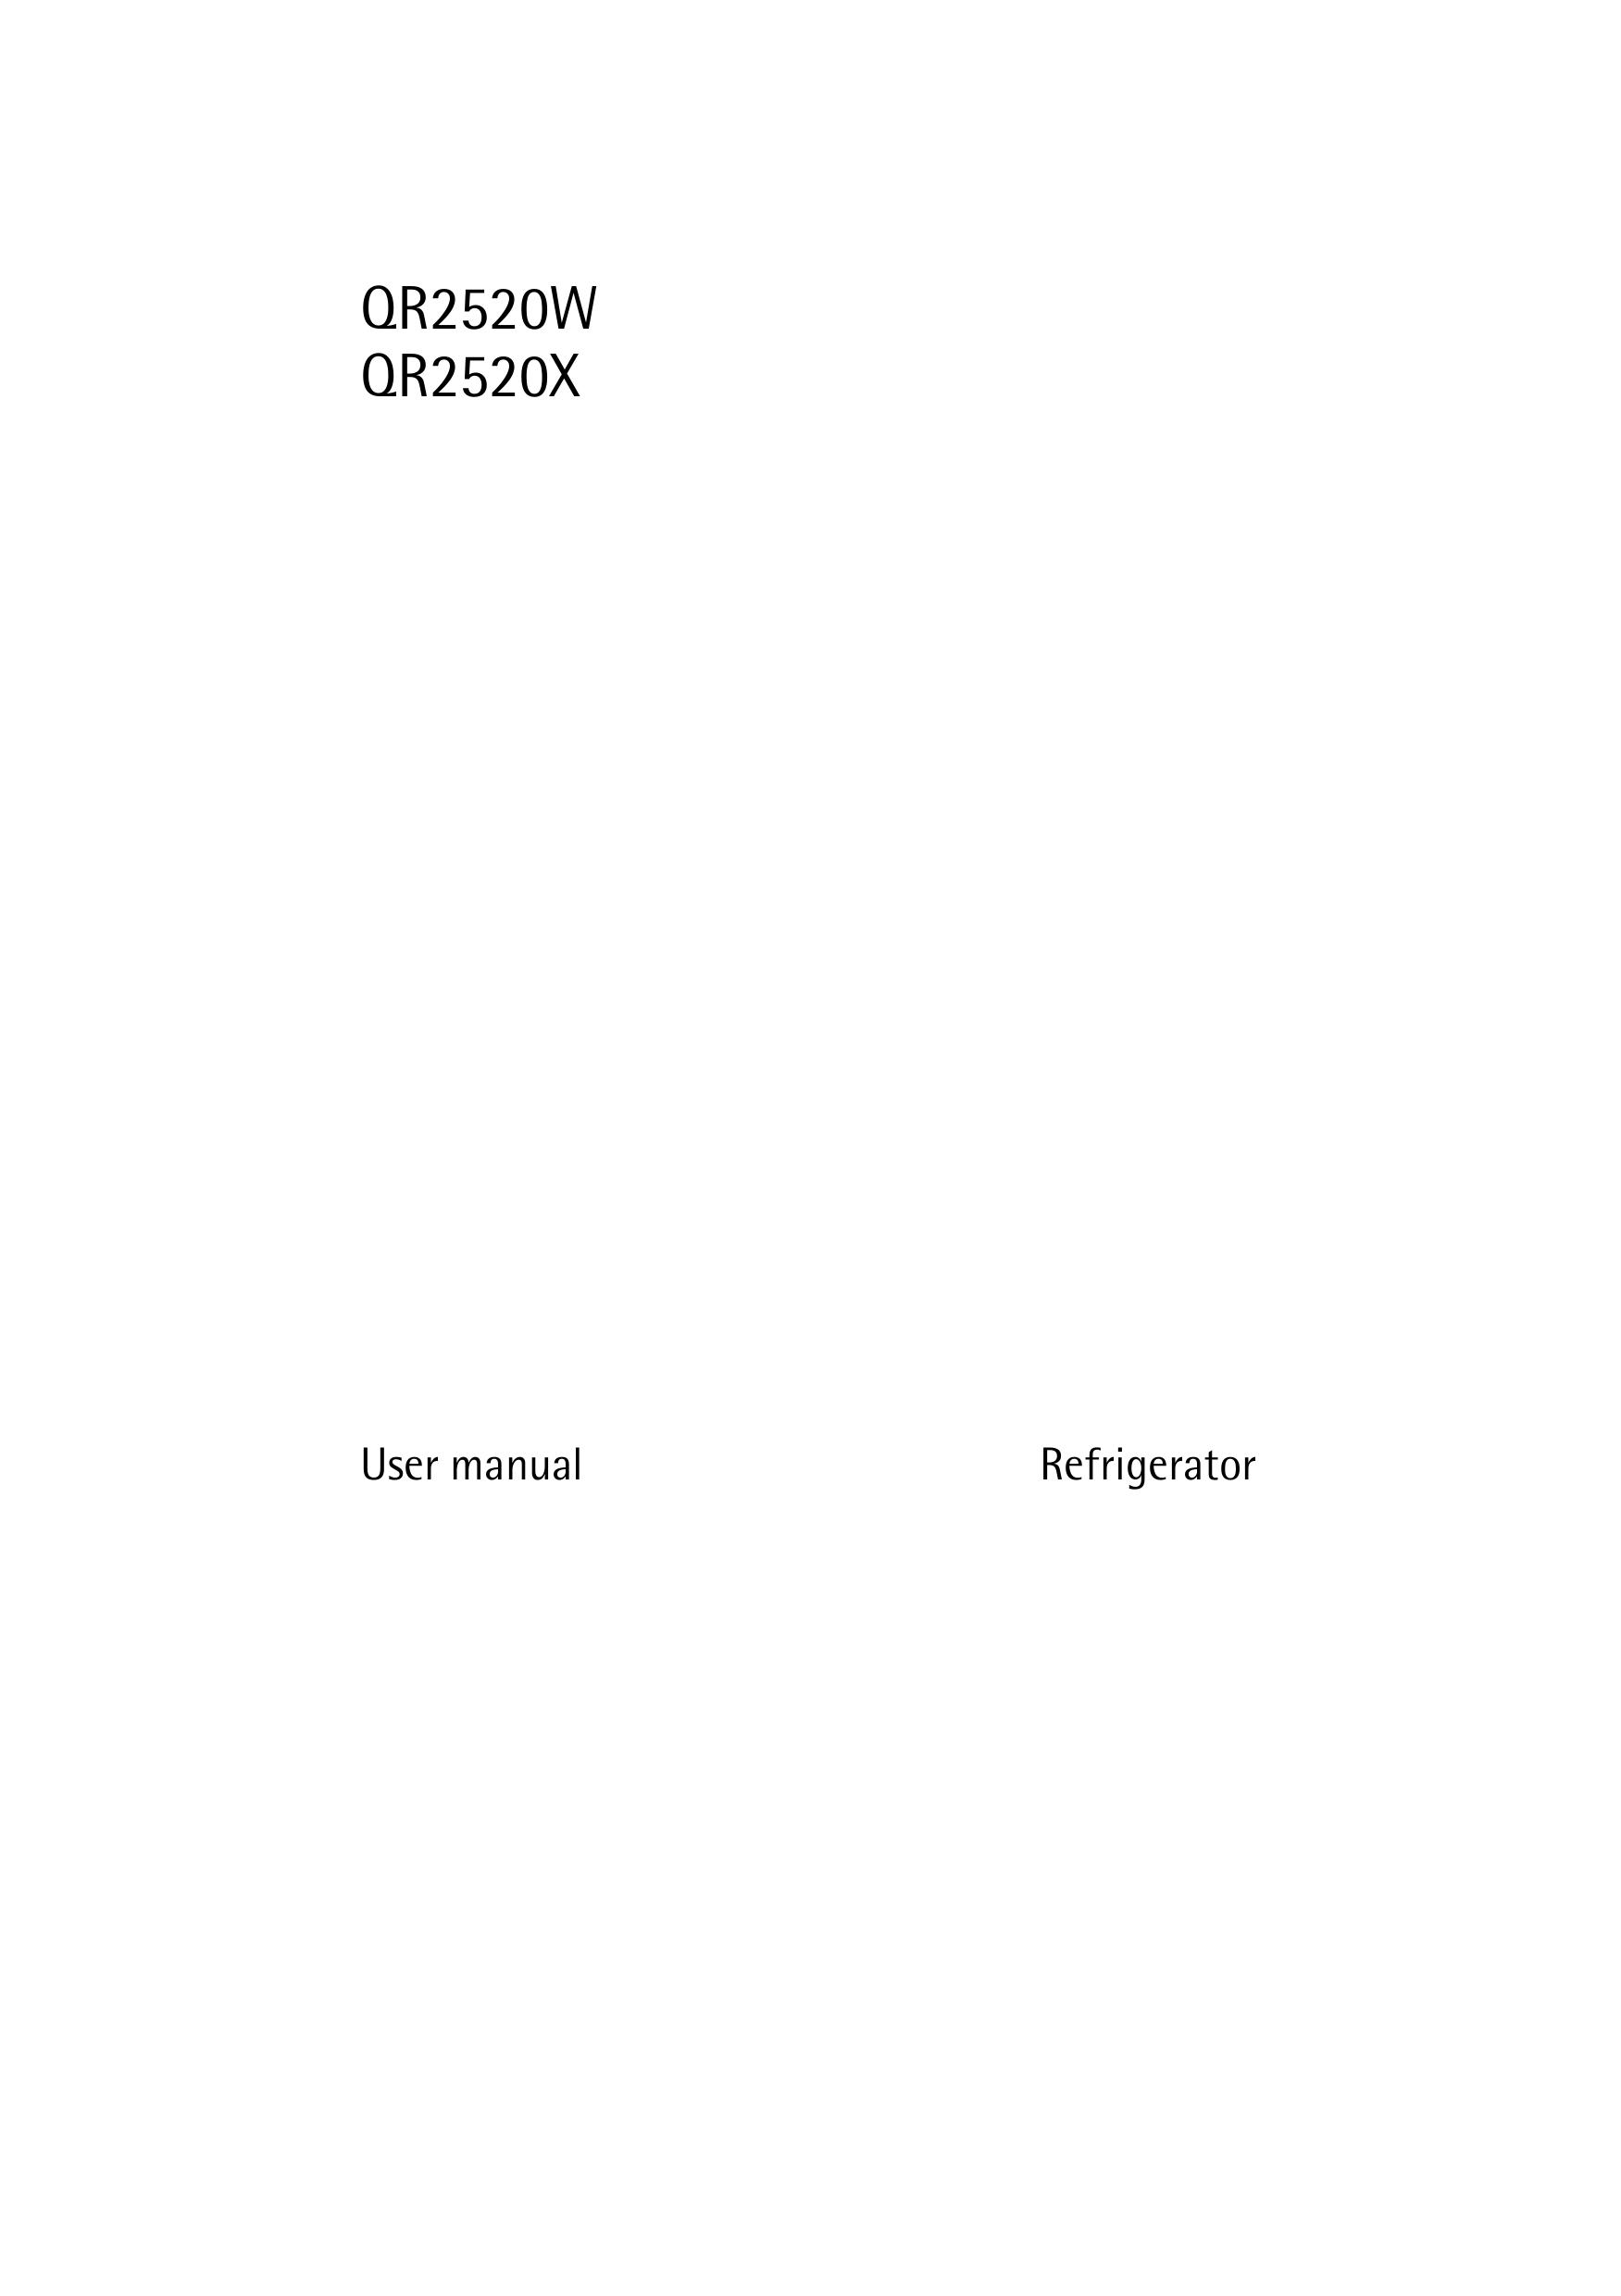 AEG QR2520X Refrigerator User Manual